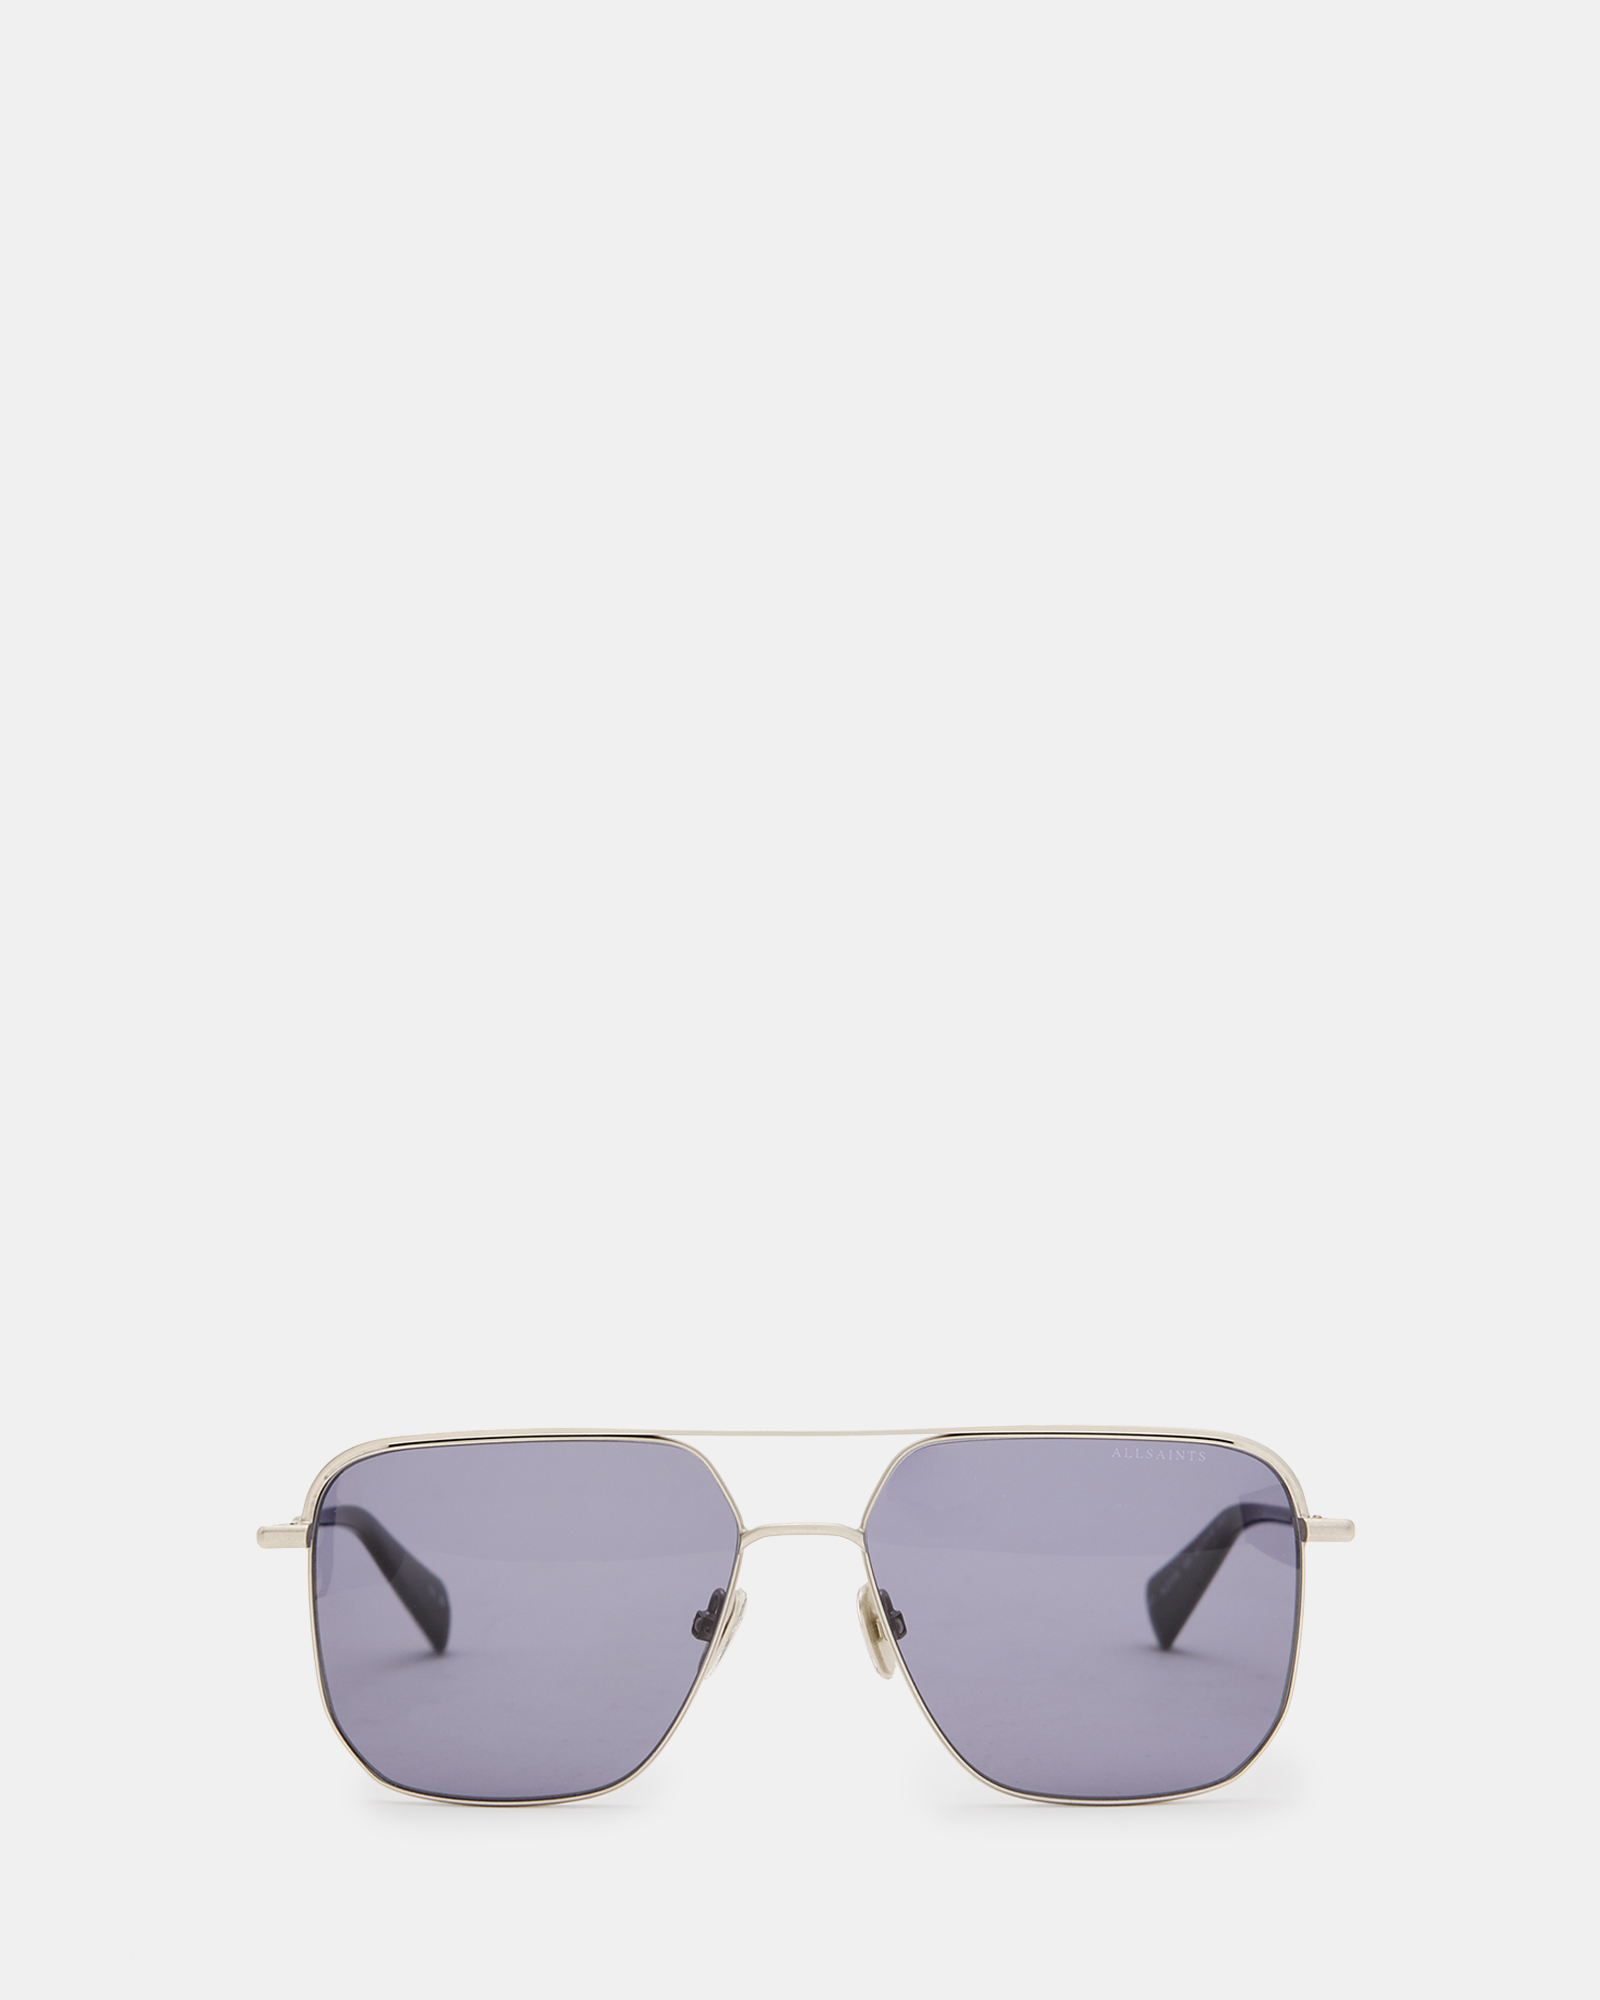 AllSaints Swift Navigator Sunglasses,, SILVER/GLOSS BLACK